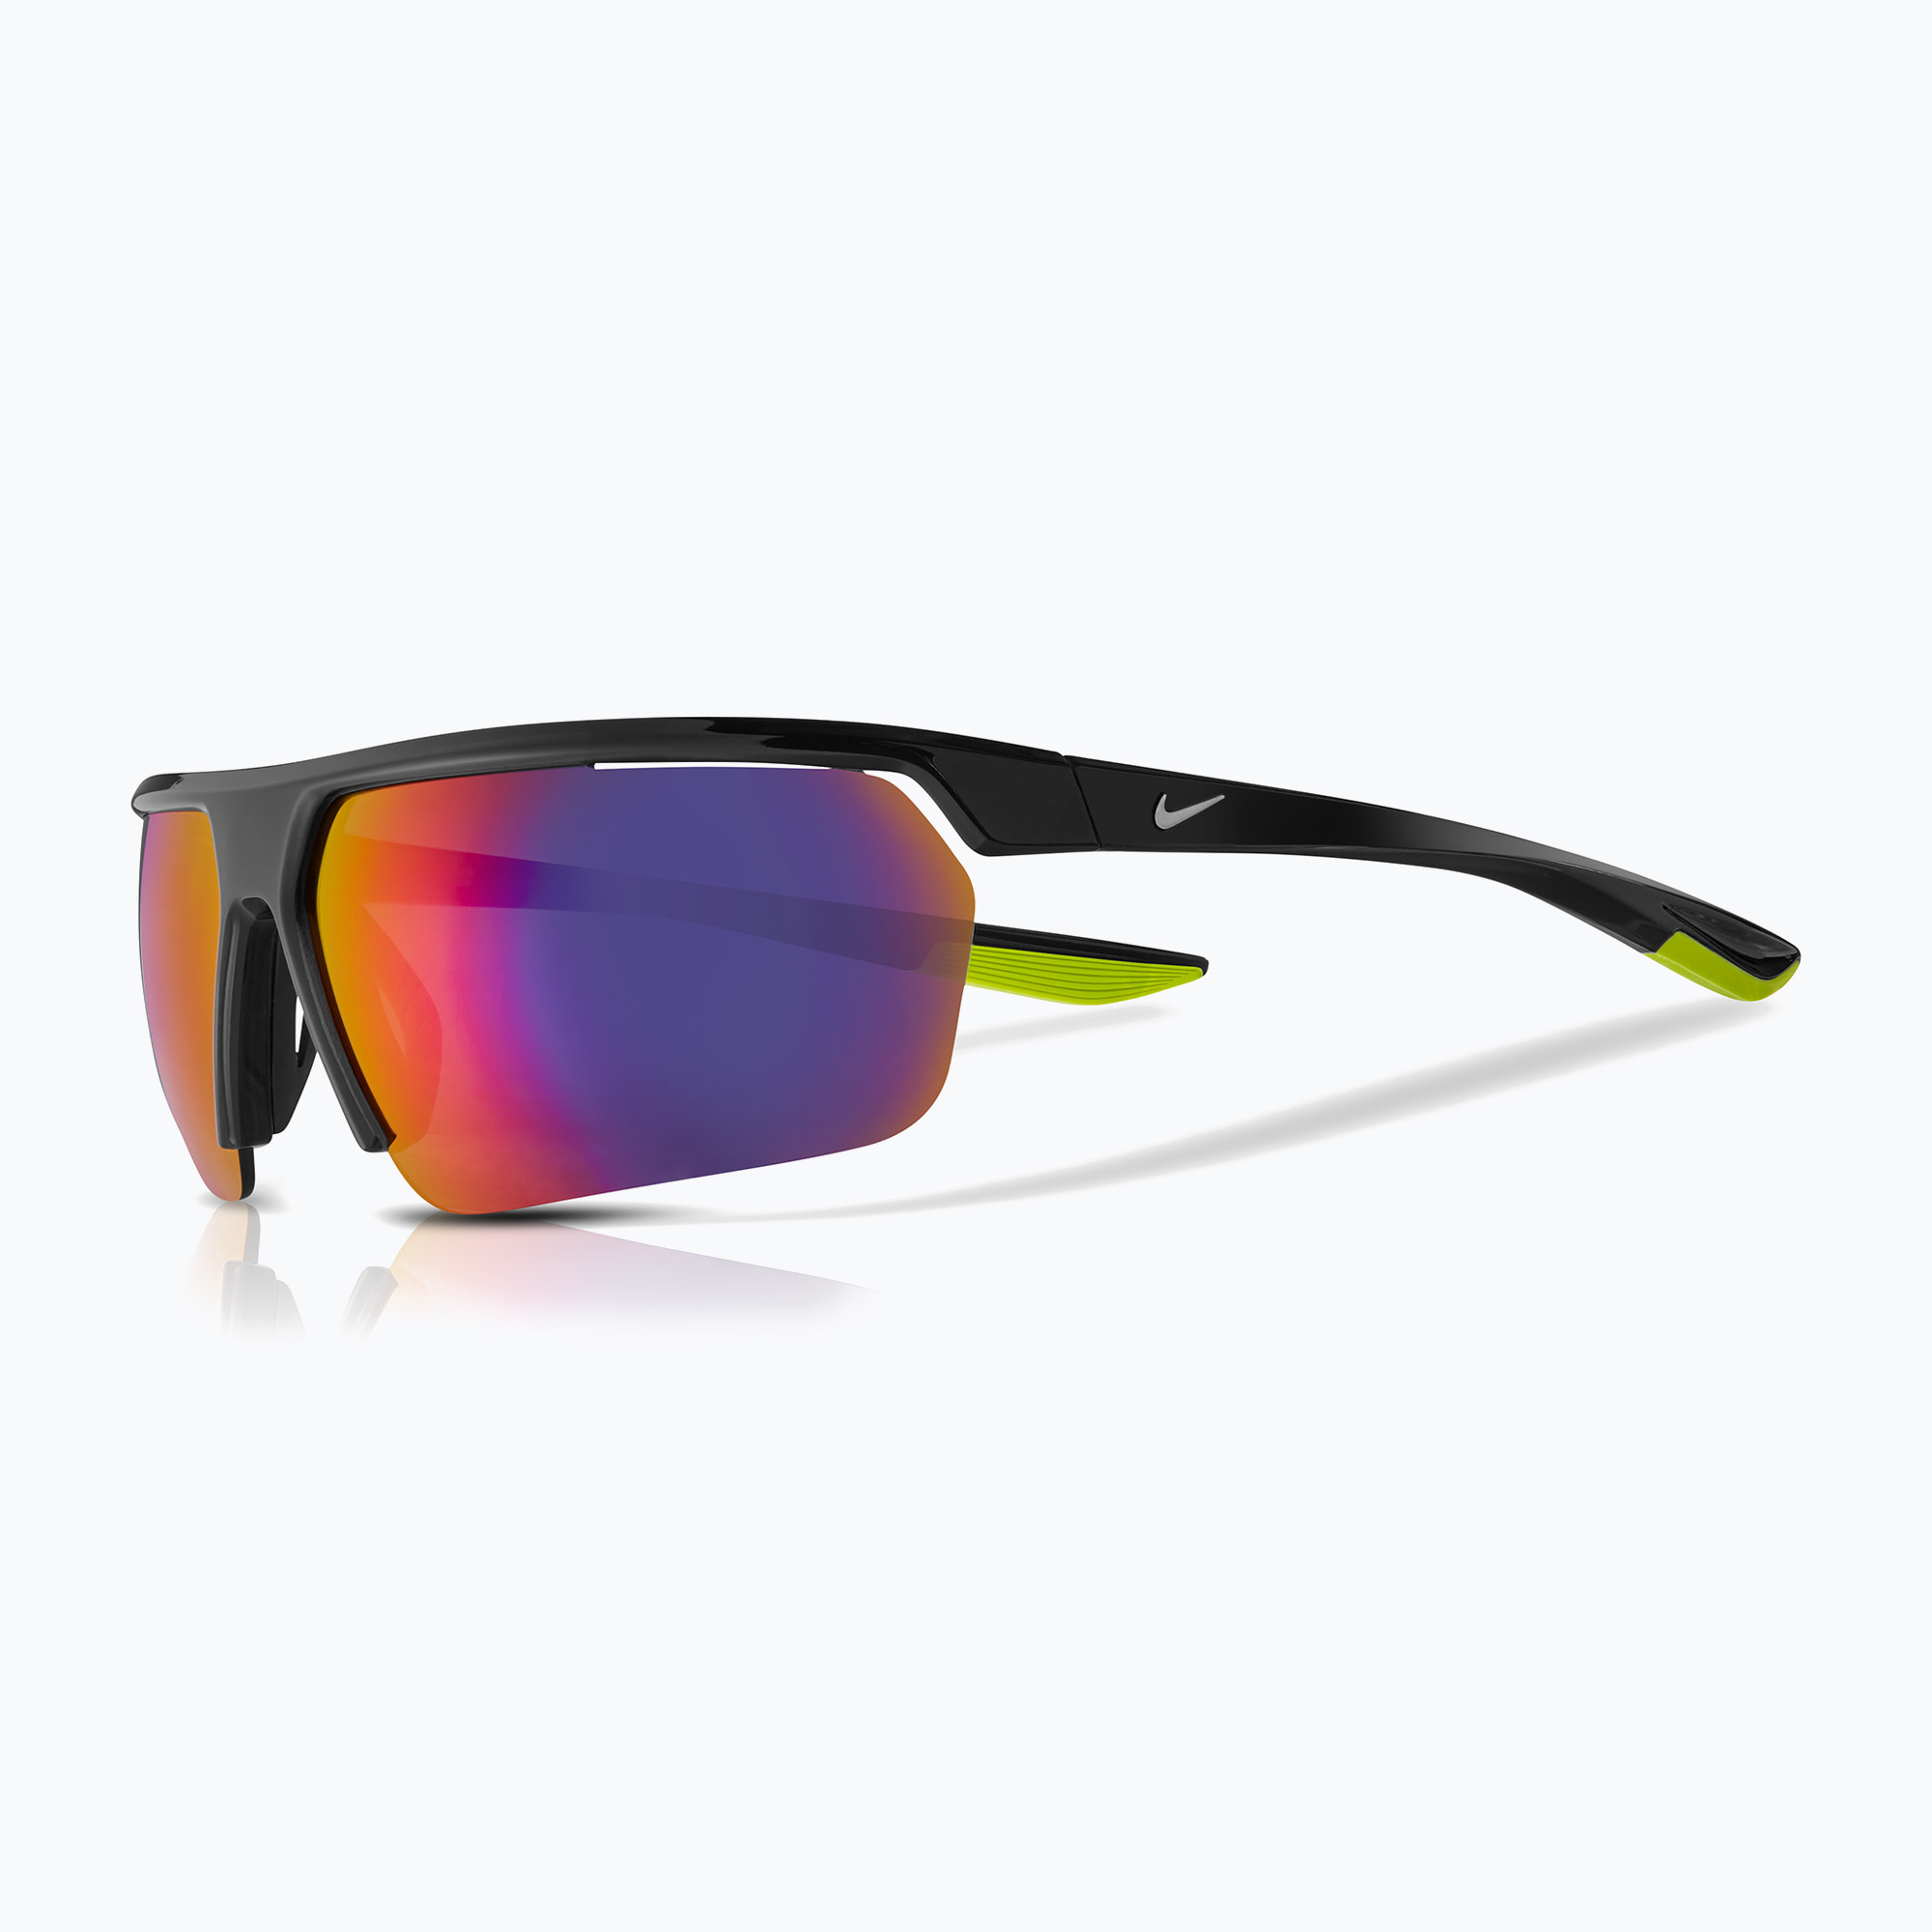 Слънчеви очила Nike Gale Force антрацит/вълчи сив/полеви нюанс